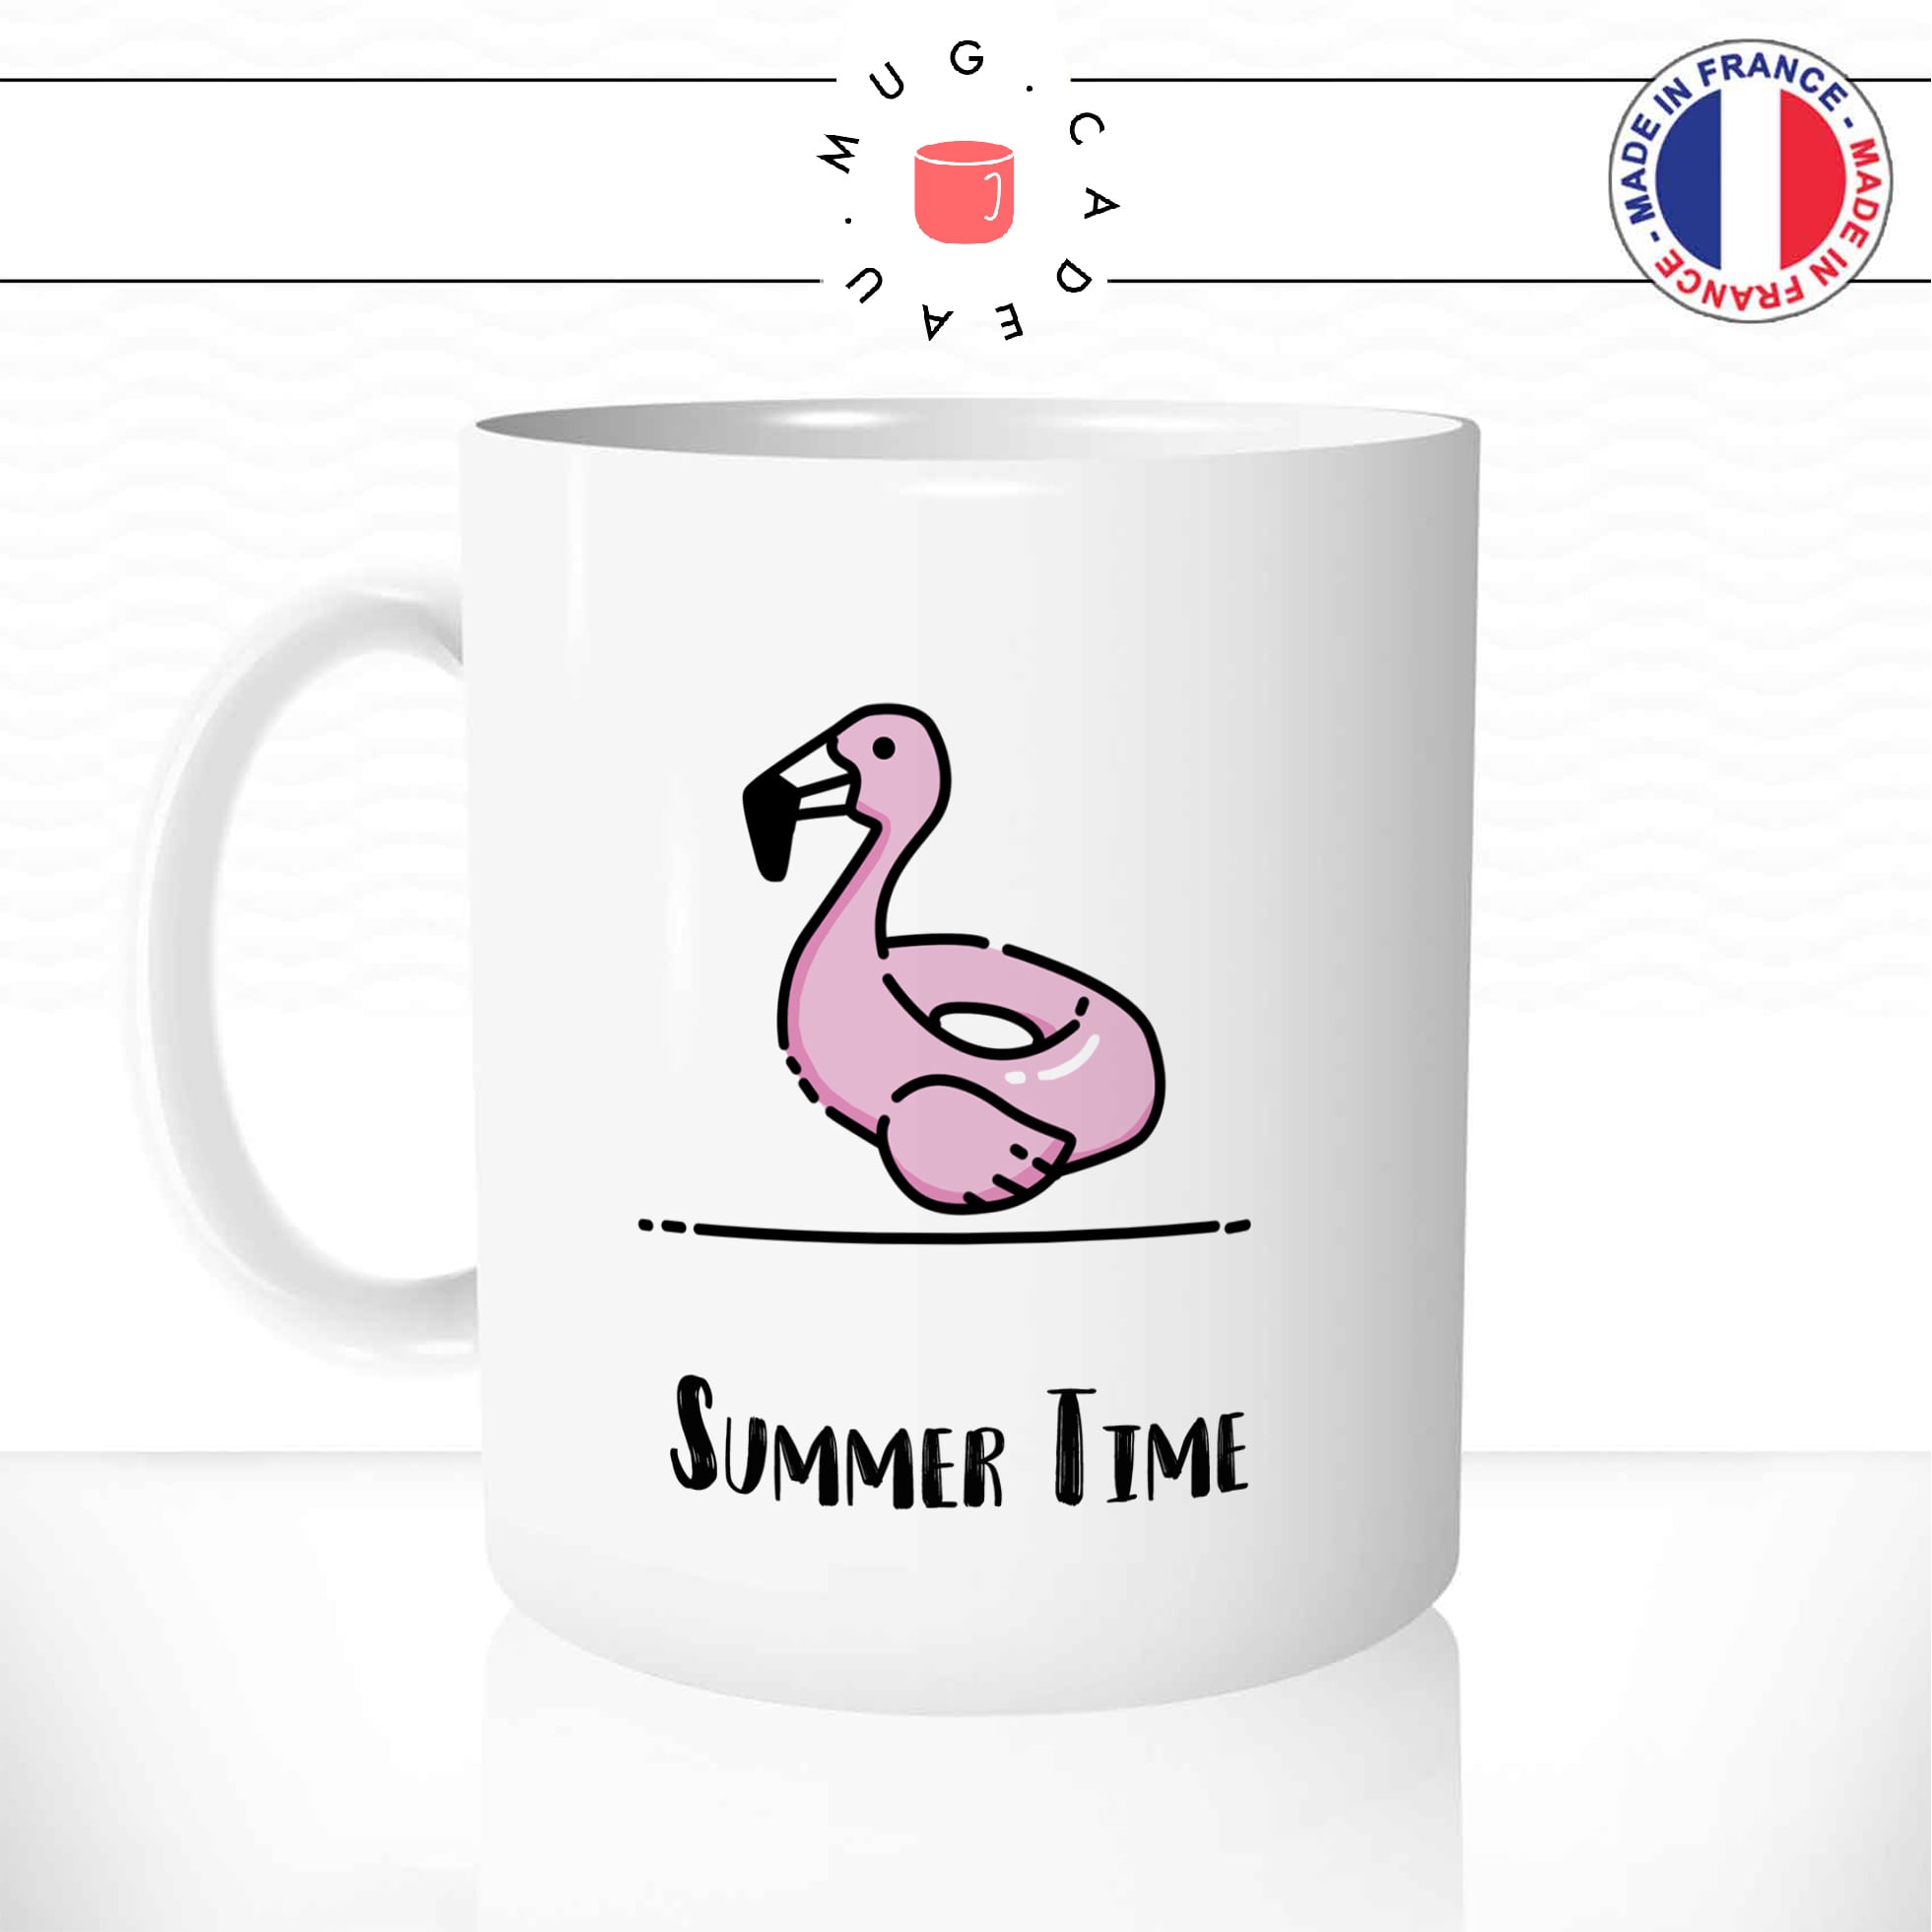 mug-tasse-ref1-flamand-rose-bouee-summer-time-cafe-the-mugs-tasses-personnalise-anse-gauche-min